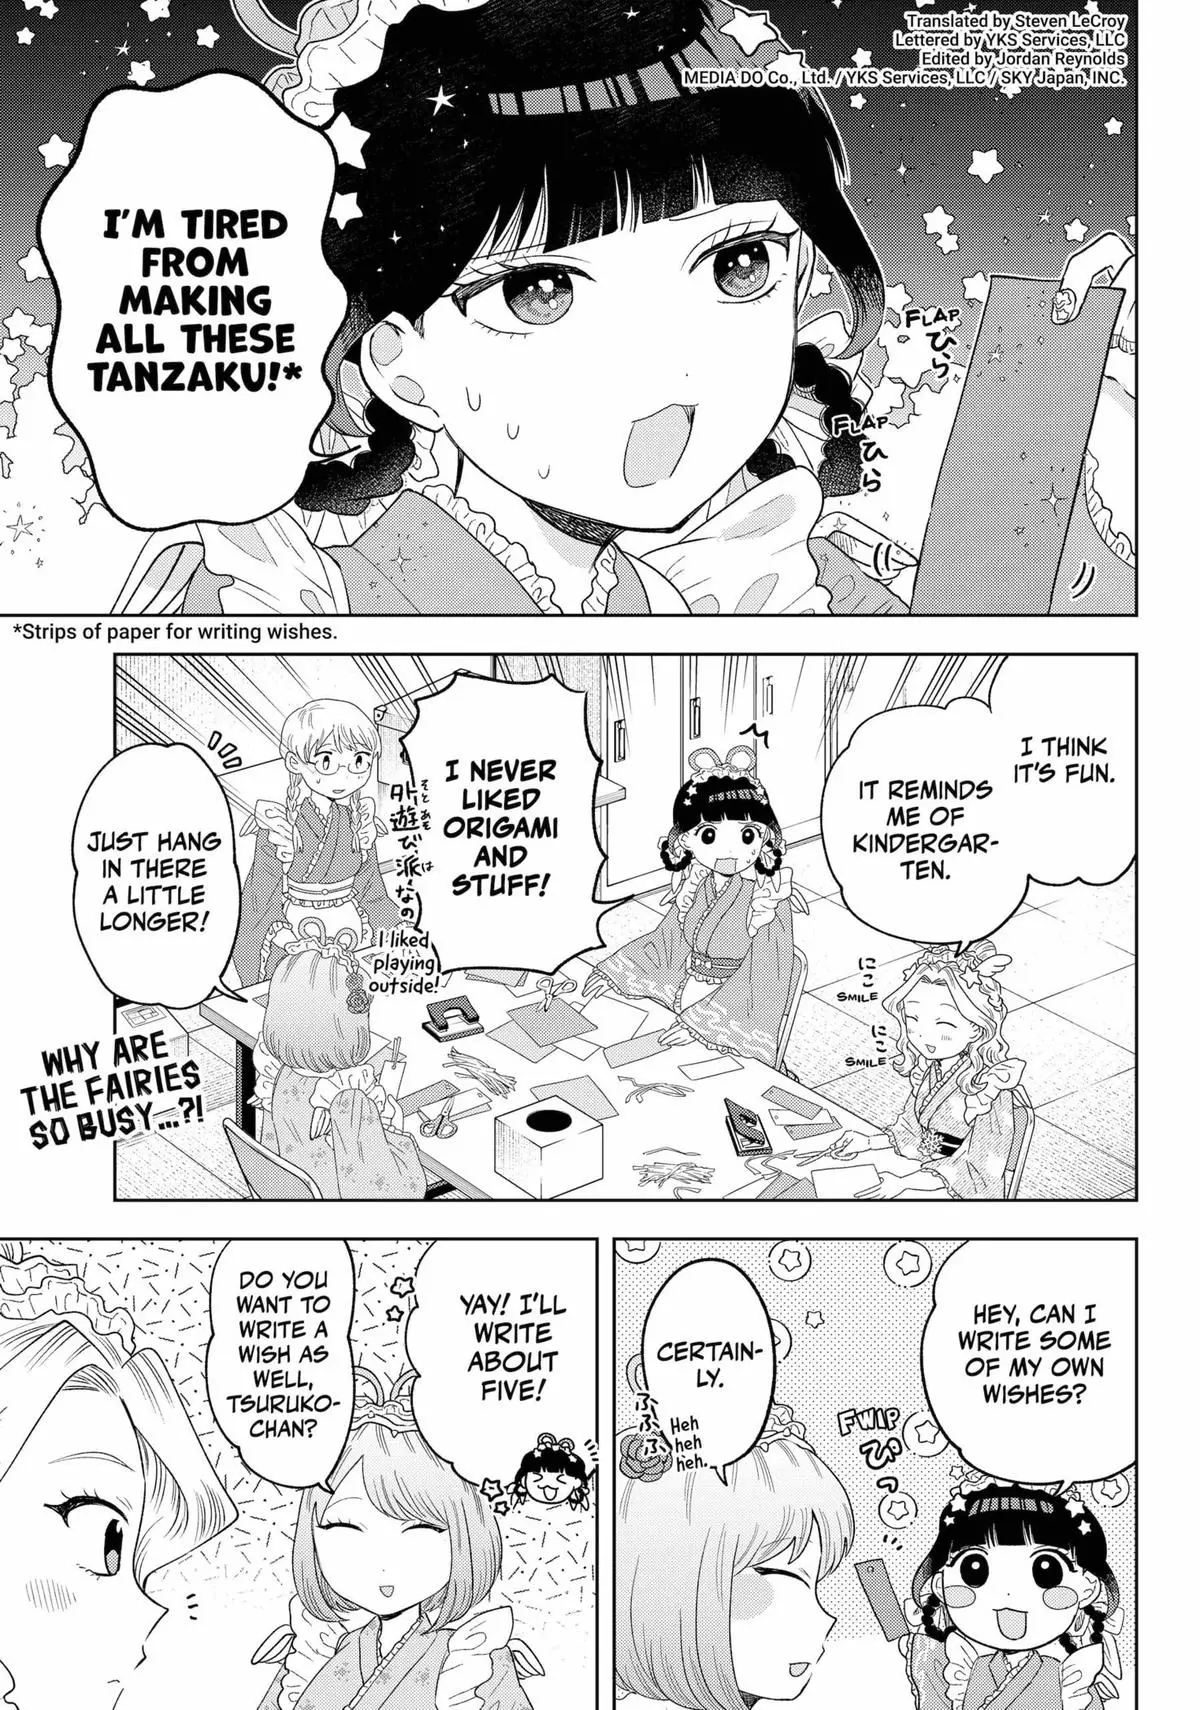 Tsuruko Returns The Favor - 14 page 1-17abbcc5